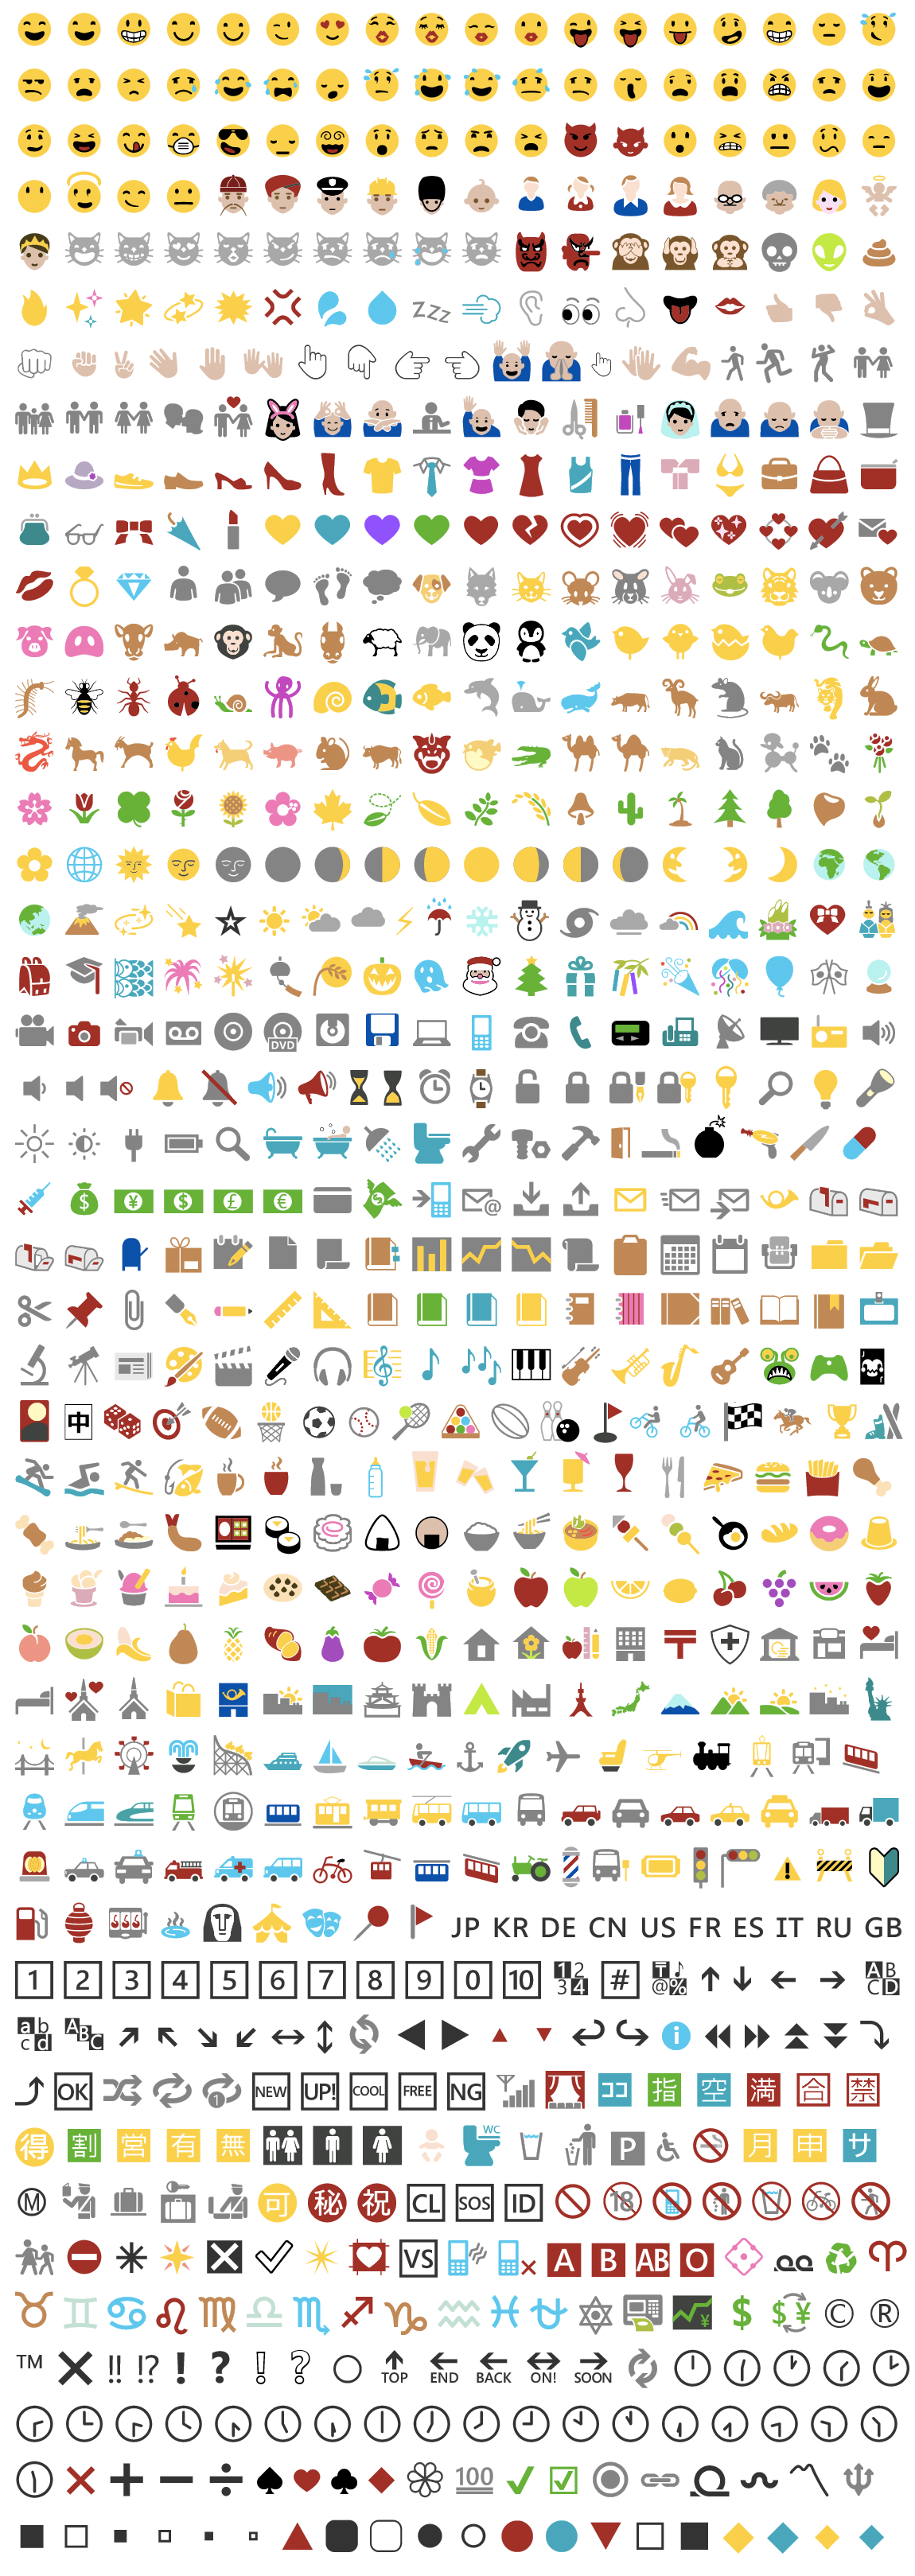 All Windows emojis